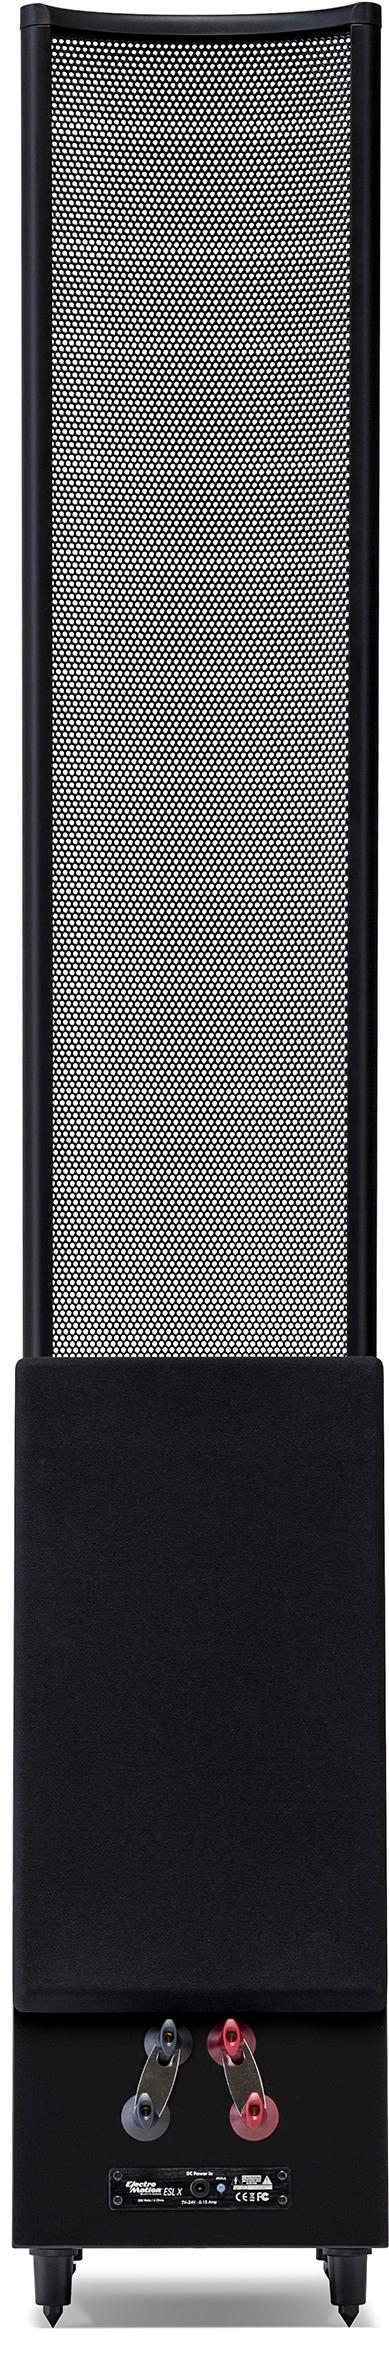 Back View: MartinLogan - Installer Series 6-1/2" 70W Outdoor Speaker (Each) - Gray Stone